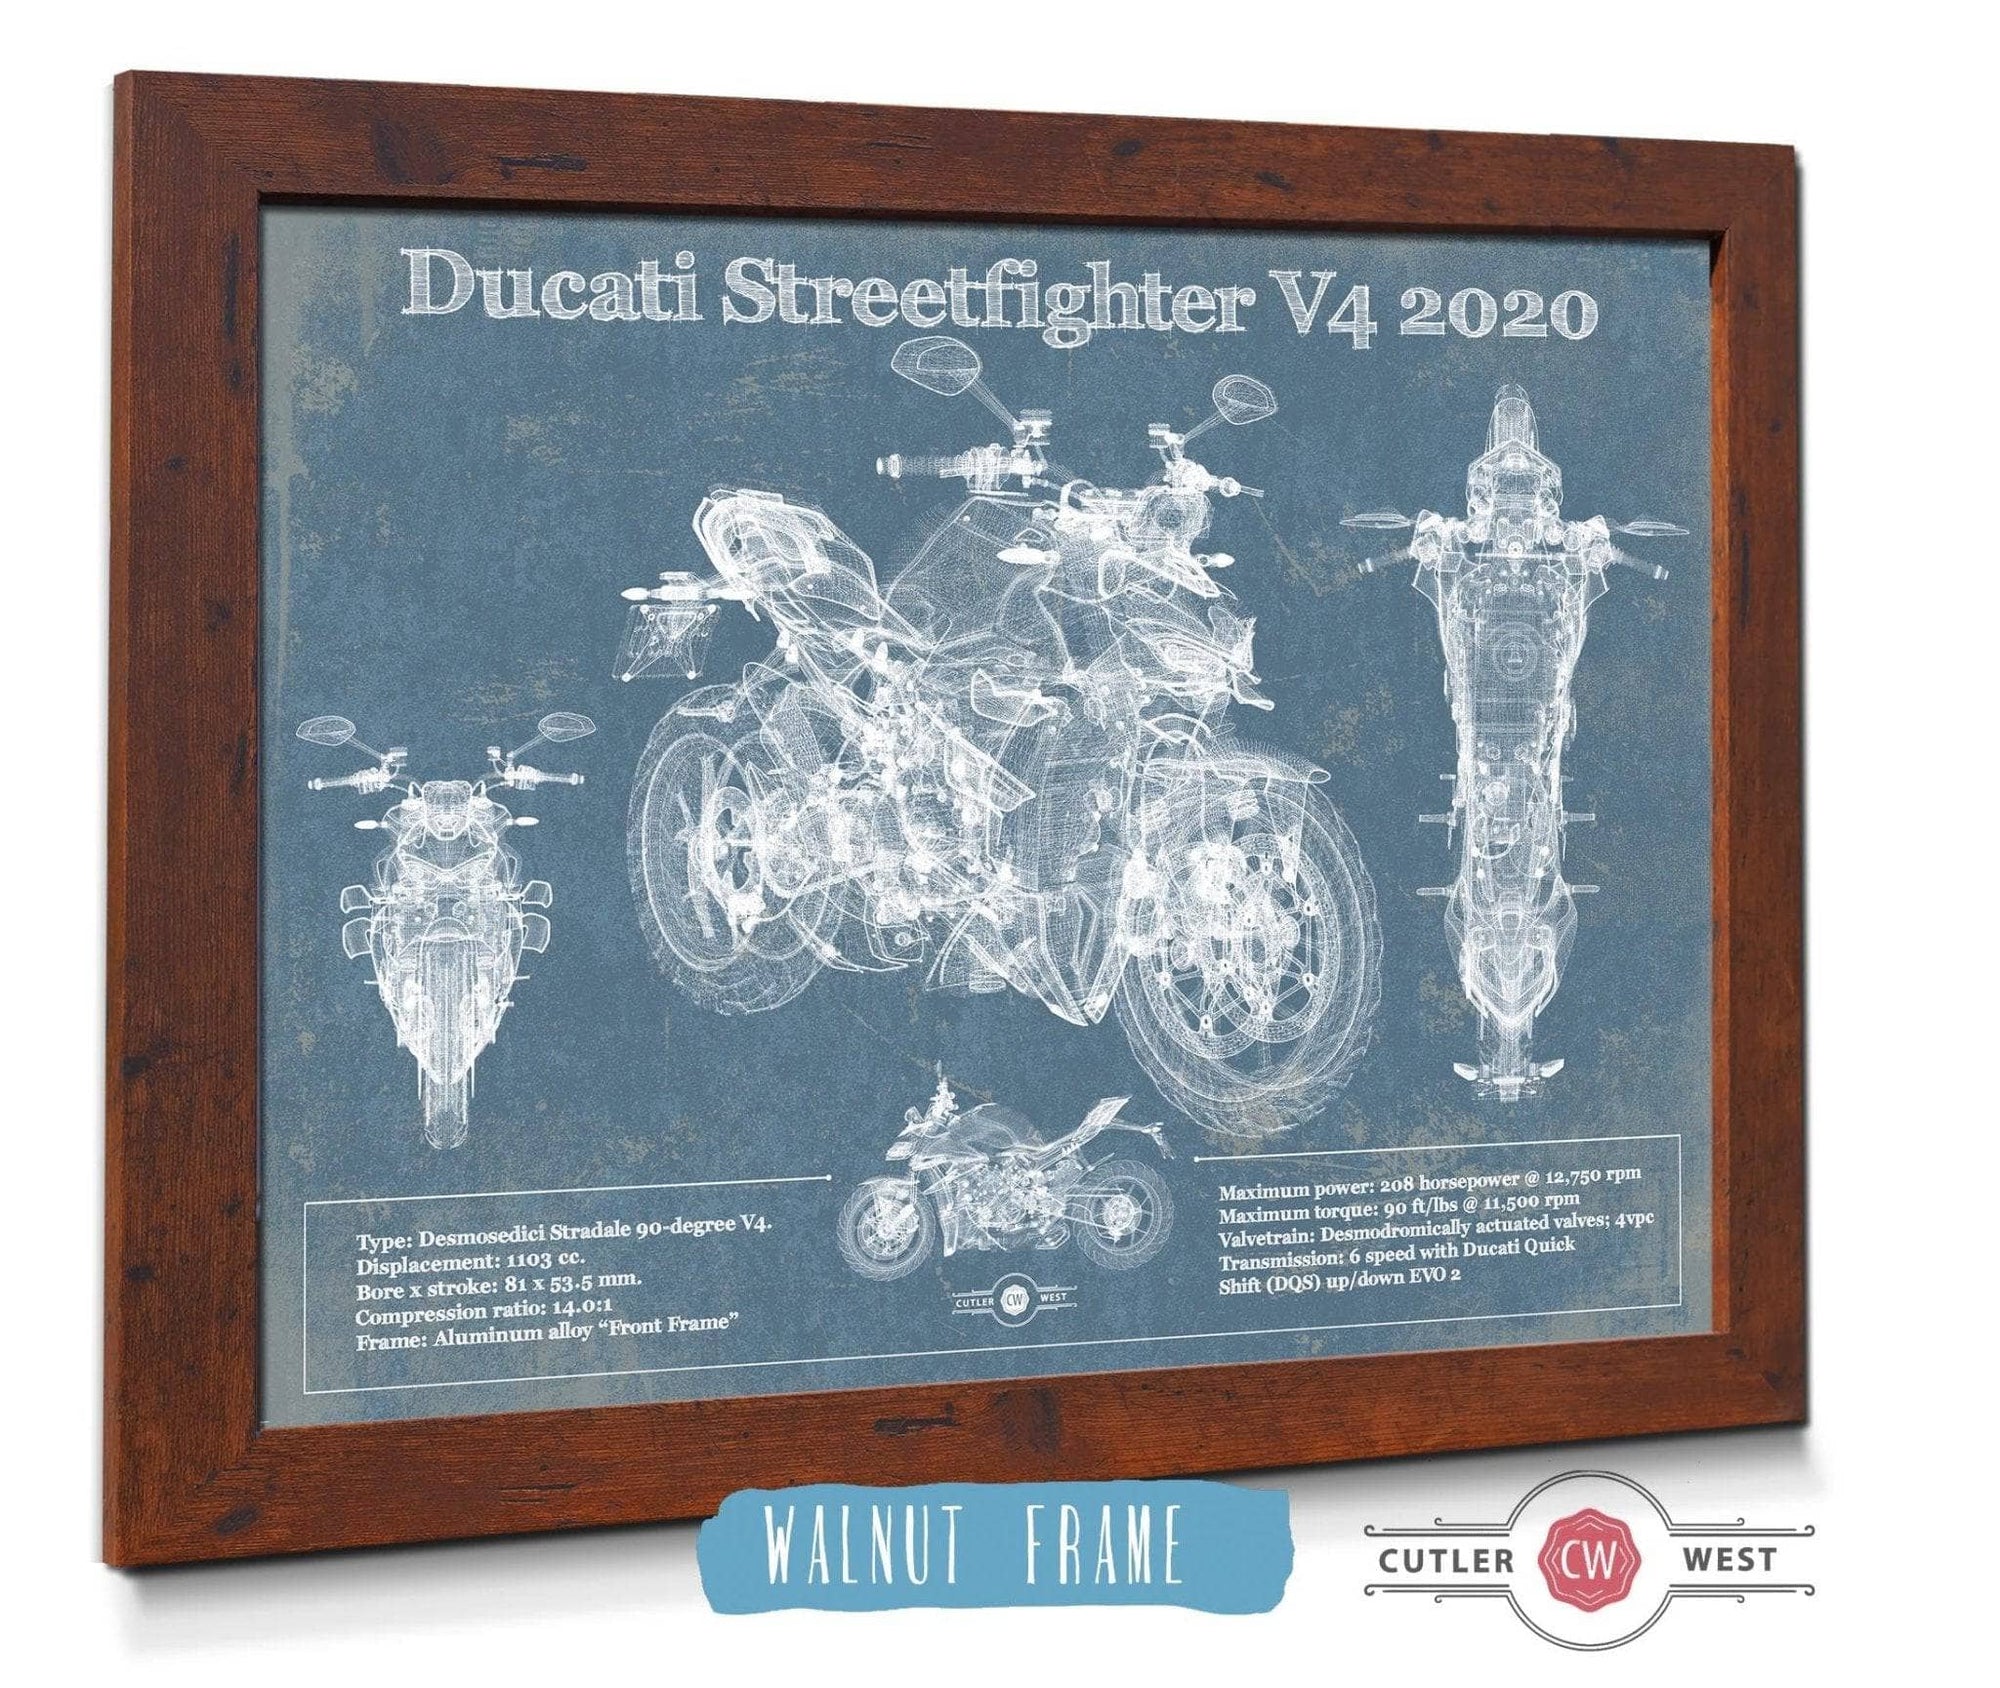 Cutler West 14" x 11" / Walnut Frame Ducati Streetfighter V4 2020 Blueprint Motorcycle Patent Print 845000240_61148